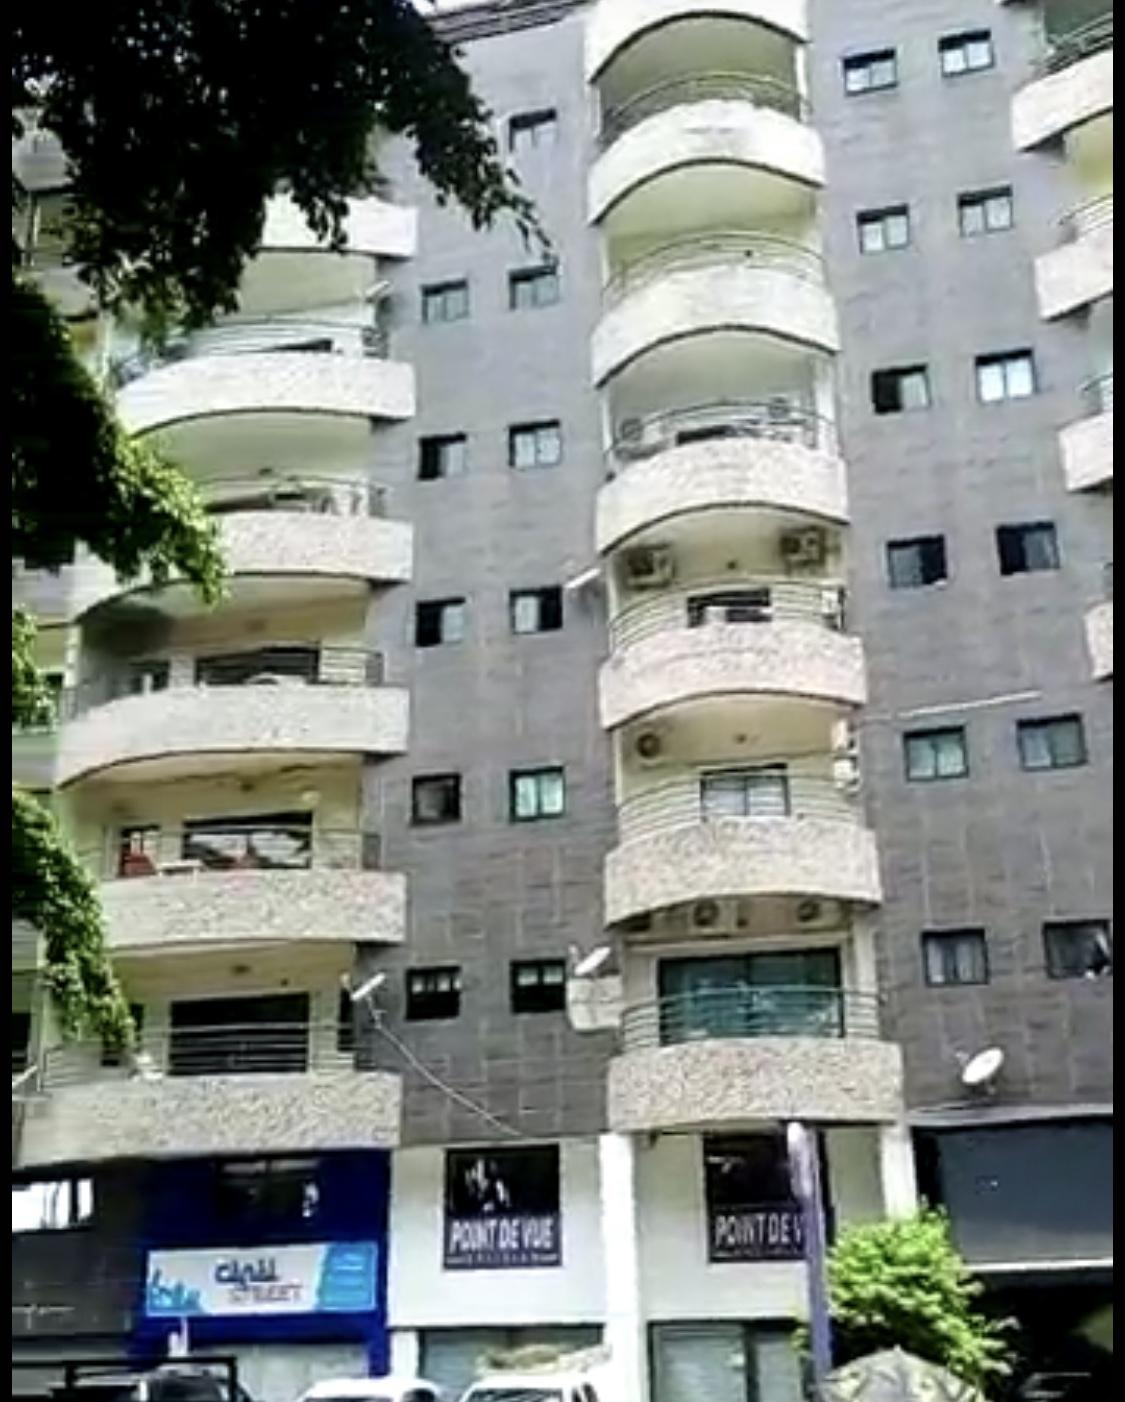 Vente d'un Immeuble à 6.000.000.000 FCFA  : Abidjan-Marcory (Zone 4)